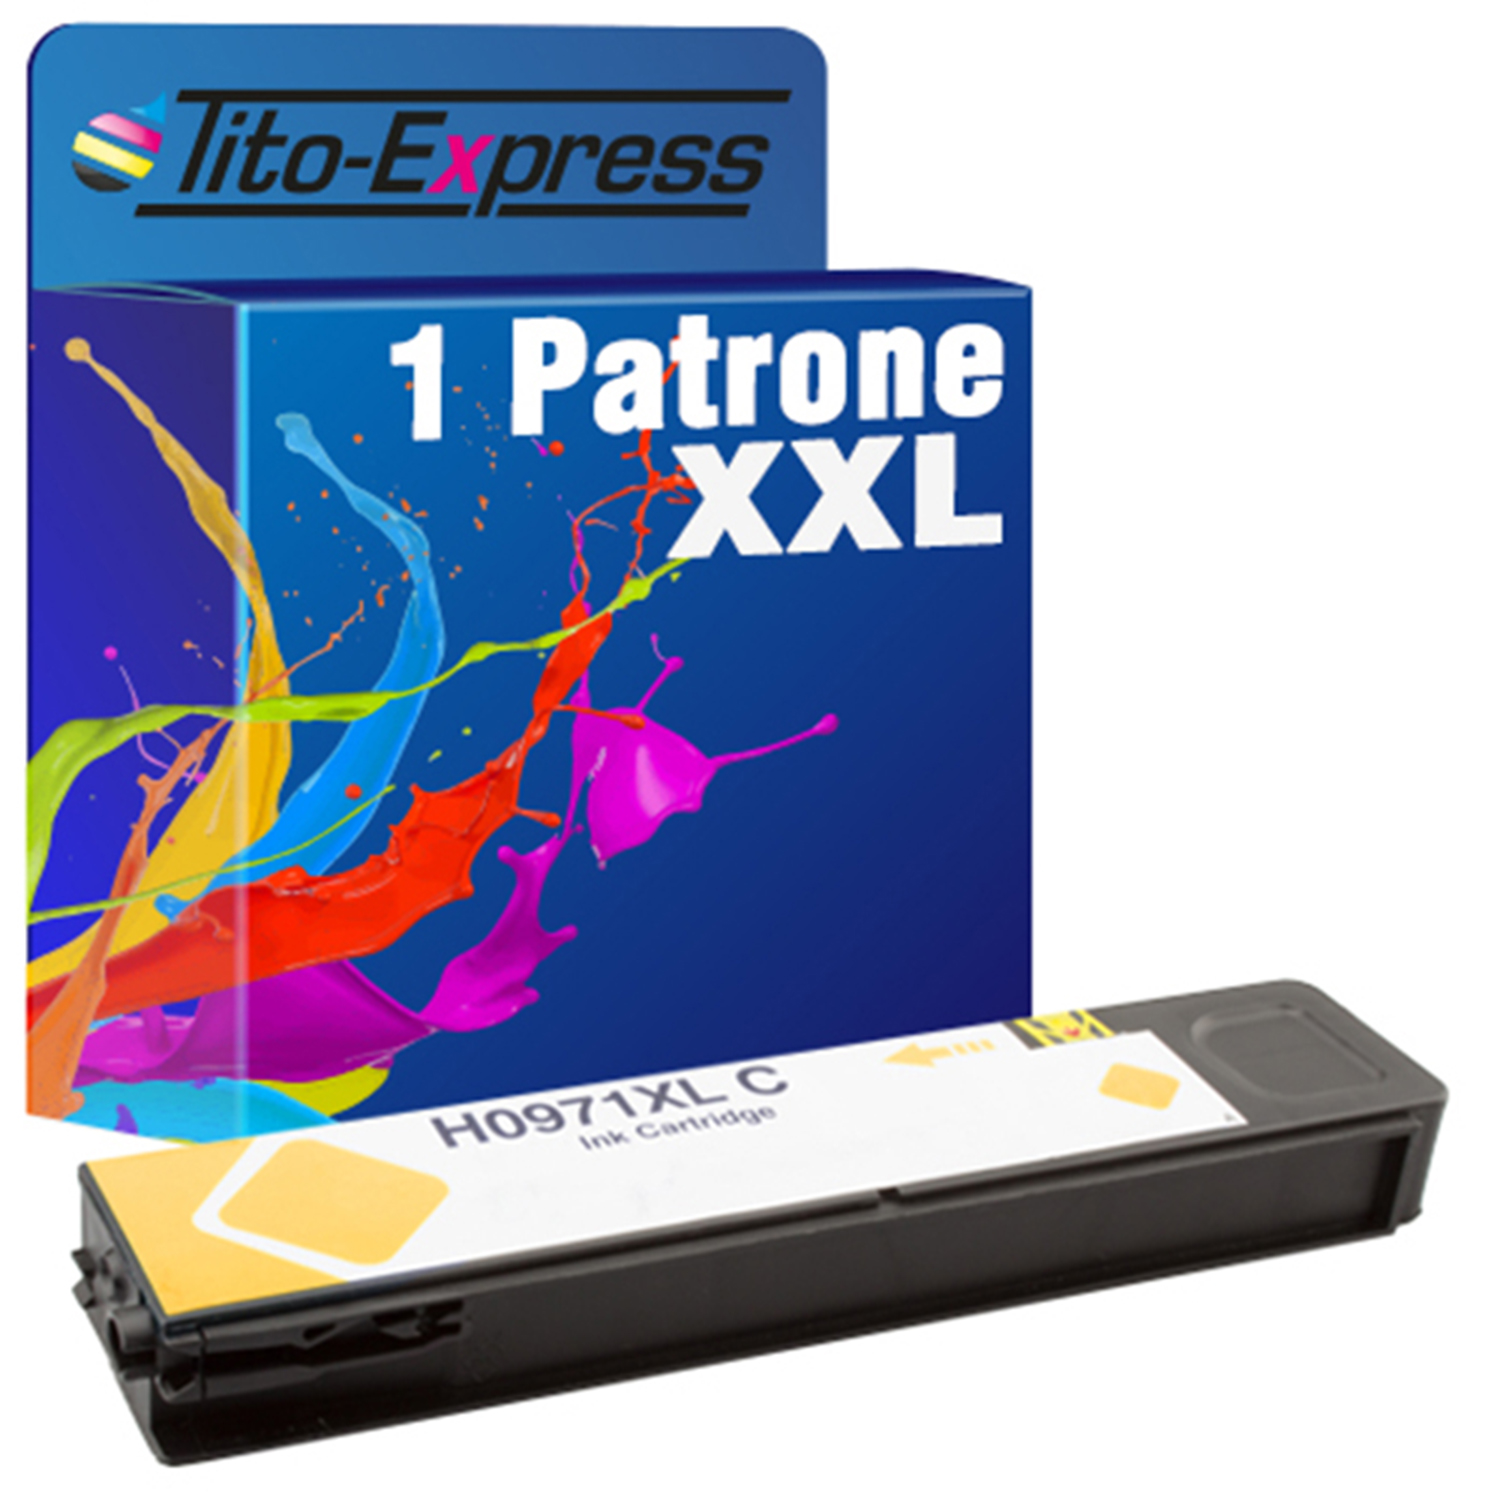 Patrone Tintenpatrone ersetzt HP 1 yellow 971XL PLATINUMSERIE (CN628AE) TITO-EXPRESS